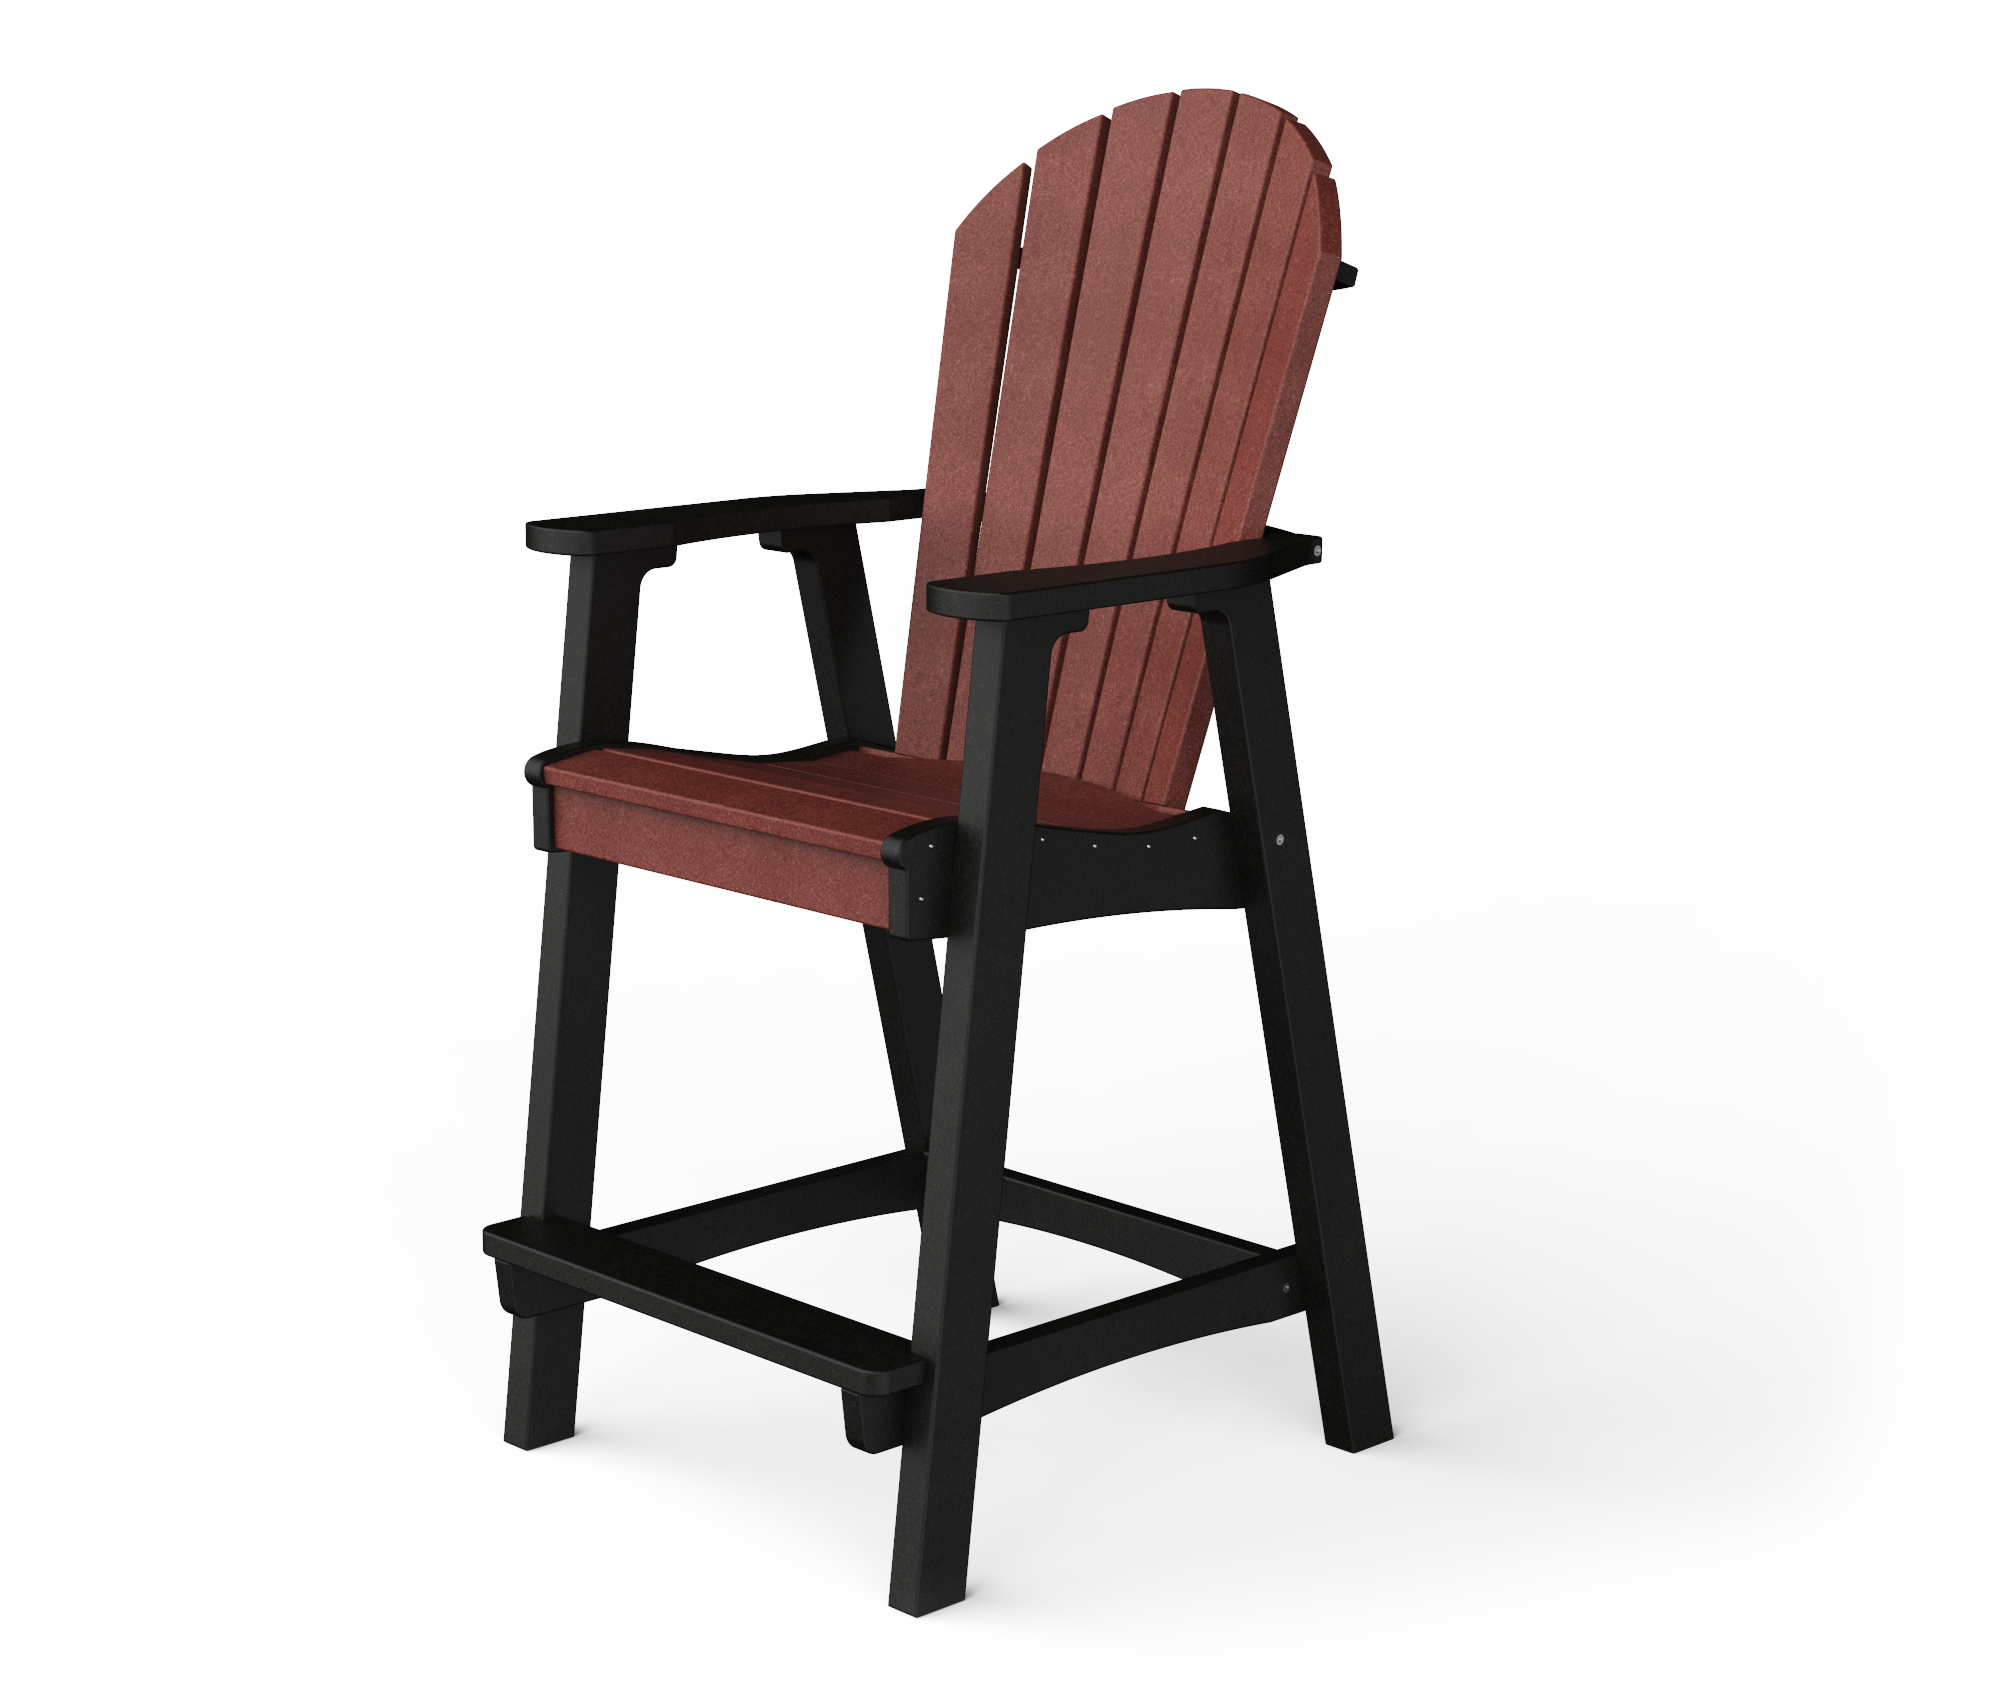 Poly Adirondack bar chair.